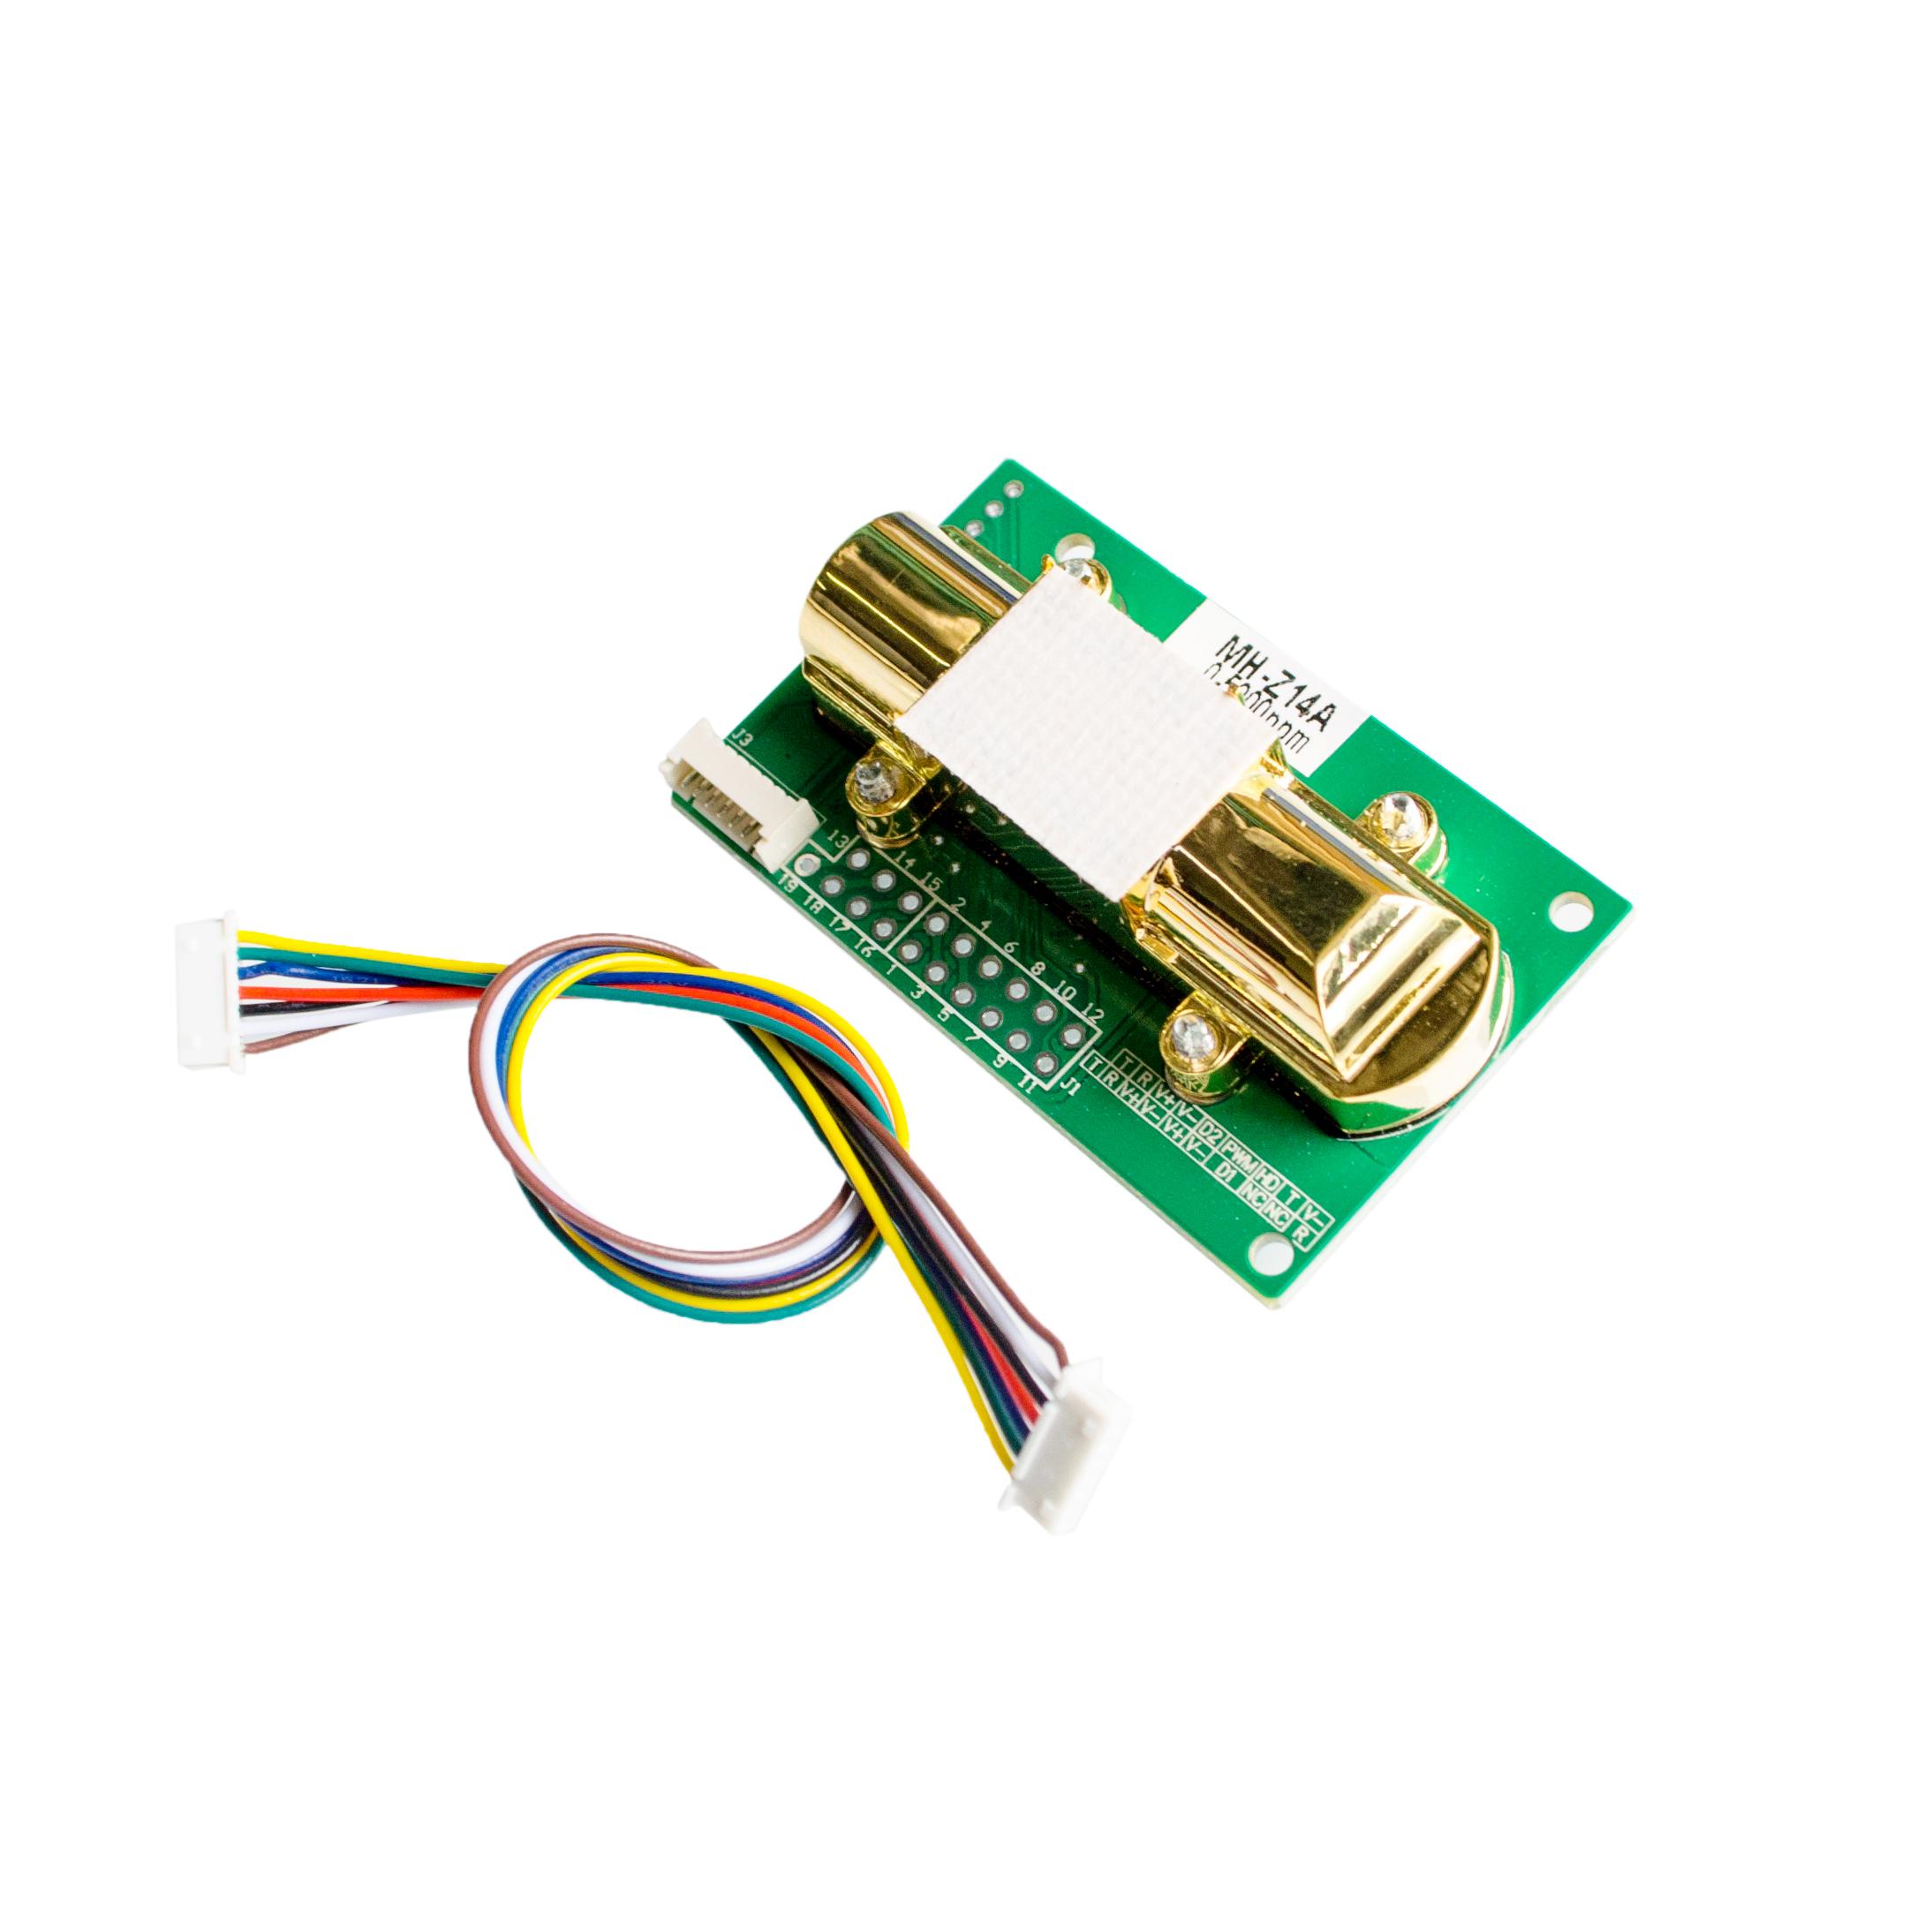 MH-Z14A Infrared carbon dioxide sensor module output environment monitoring